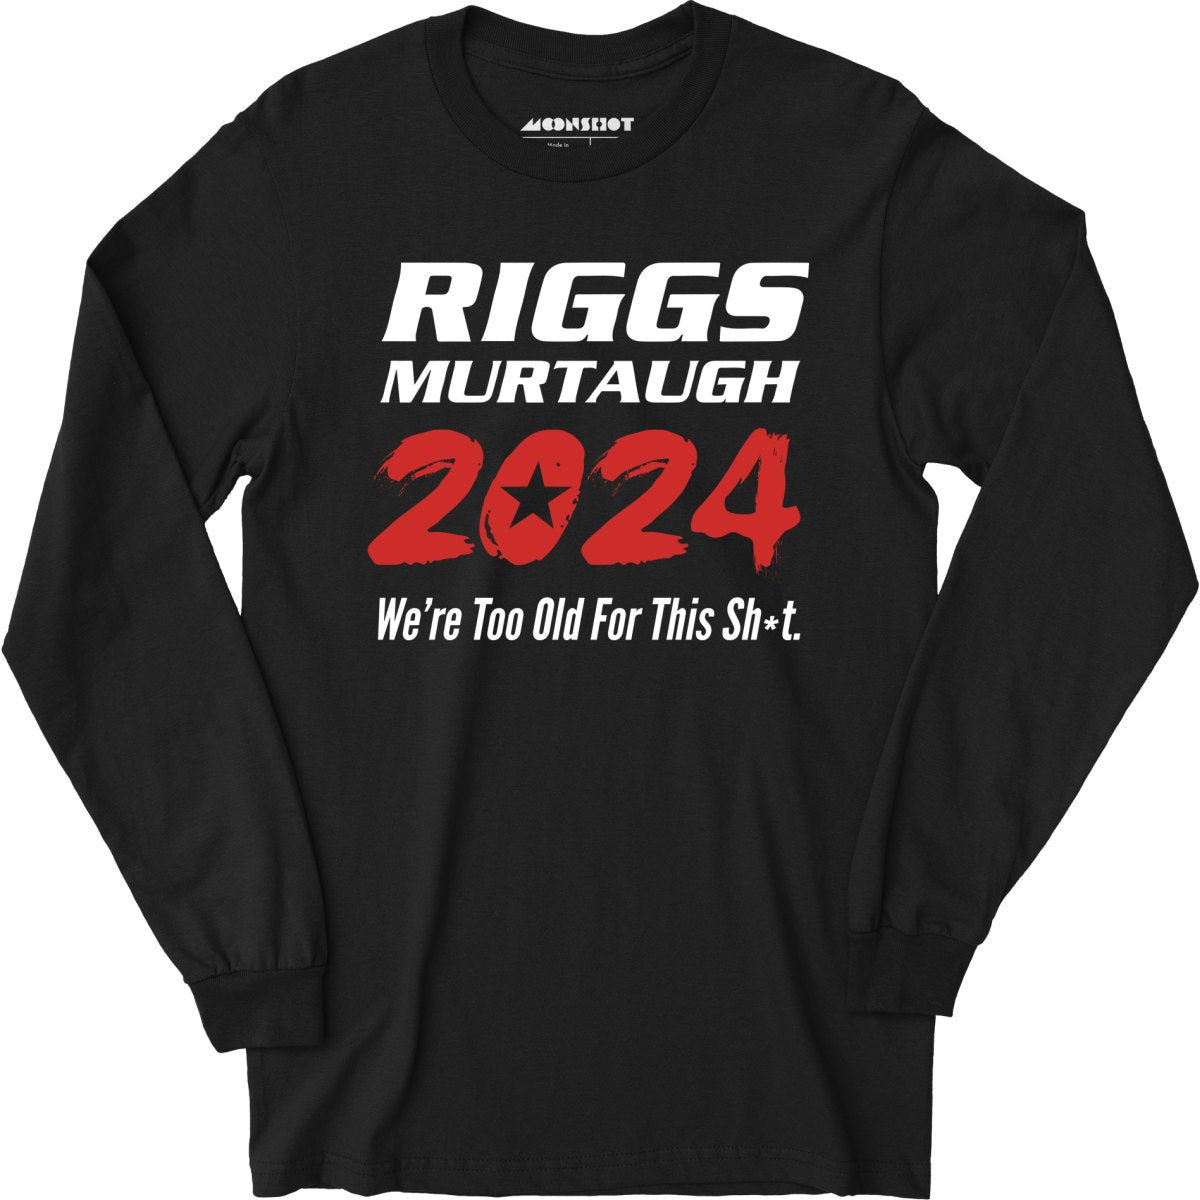 Riggs Murtaugh 2024 - Long Sleeve T-Shirt